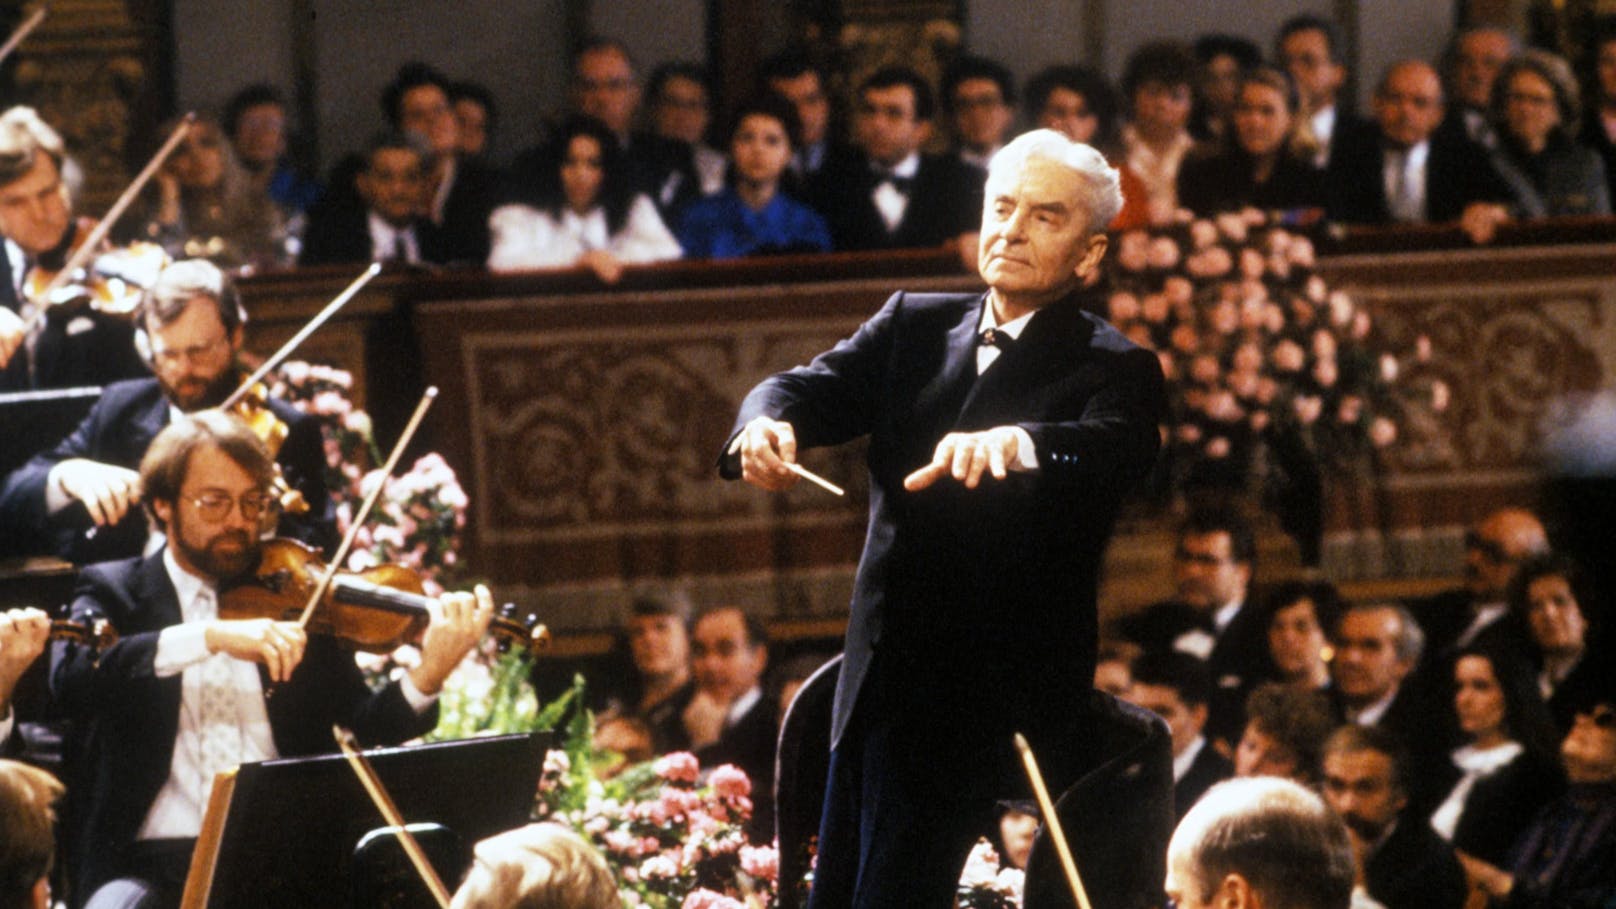 Theater entfernt Karajan-Büste wegen NS-Vergangenheit